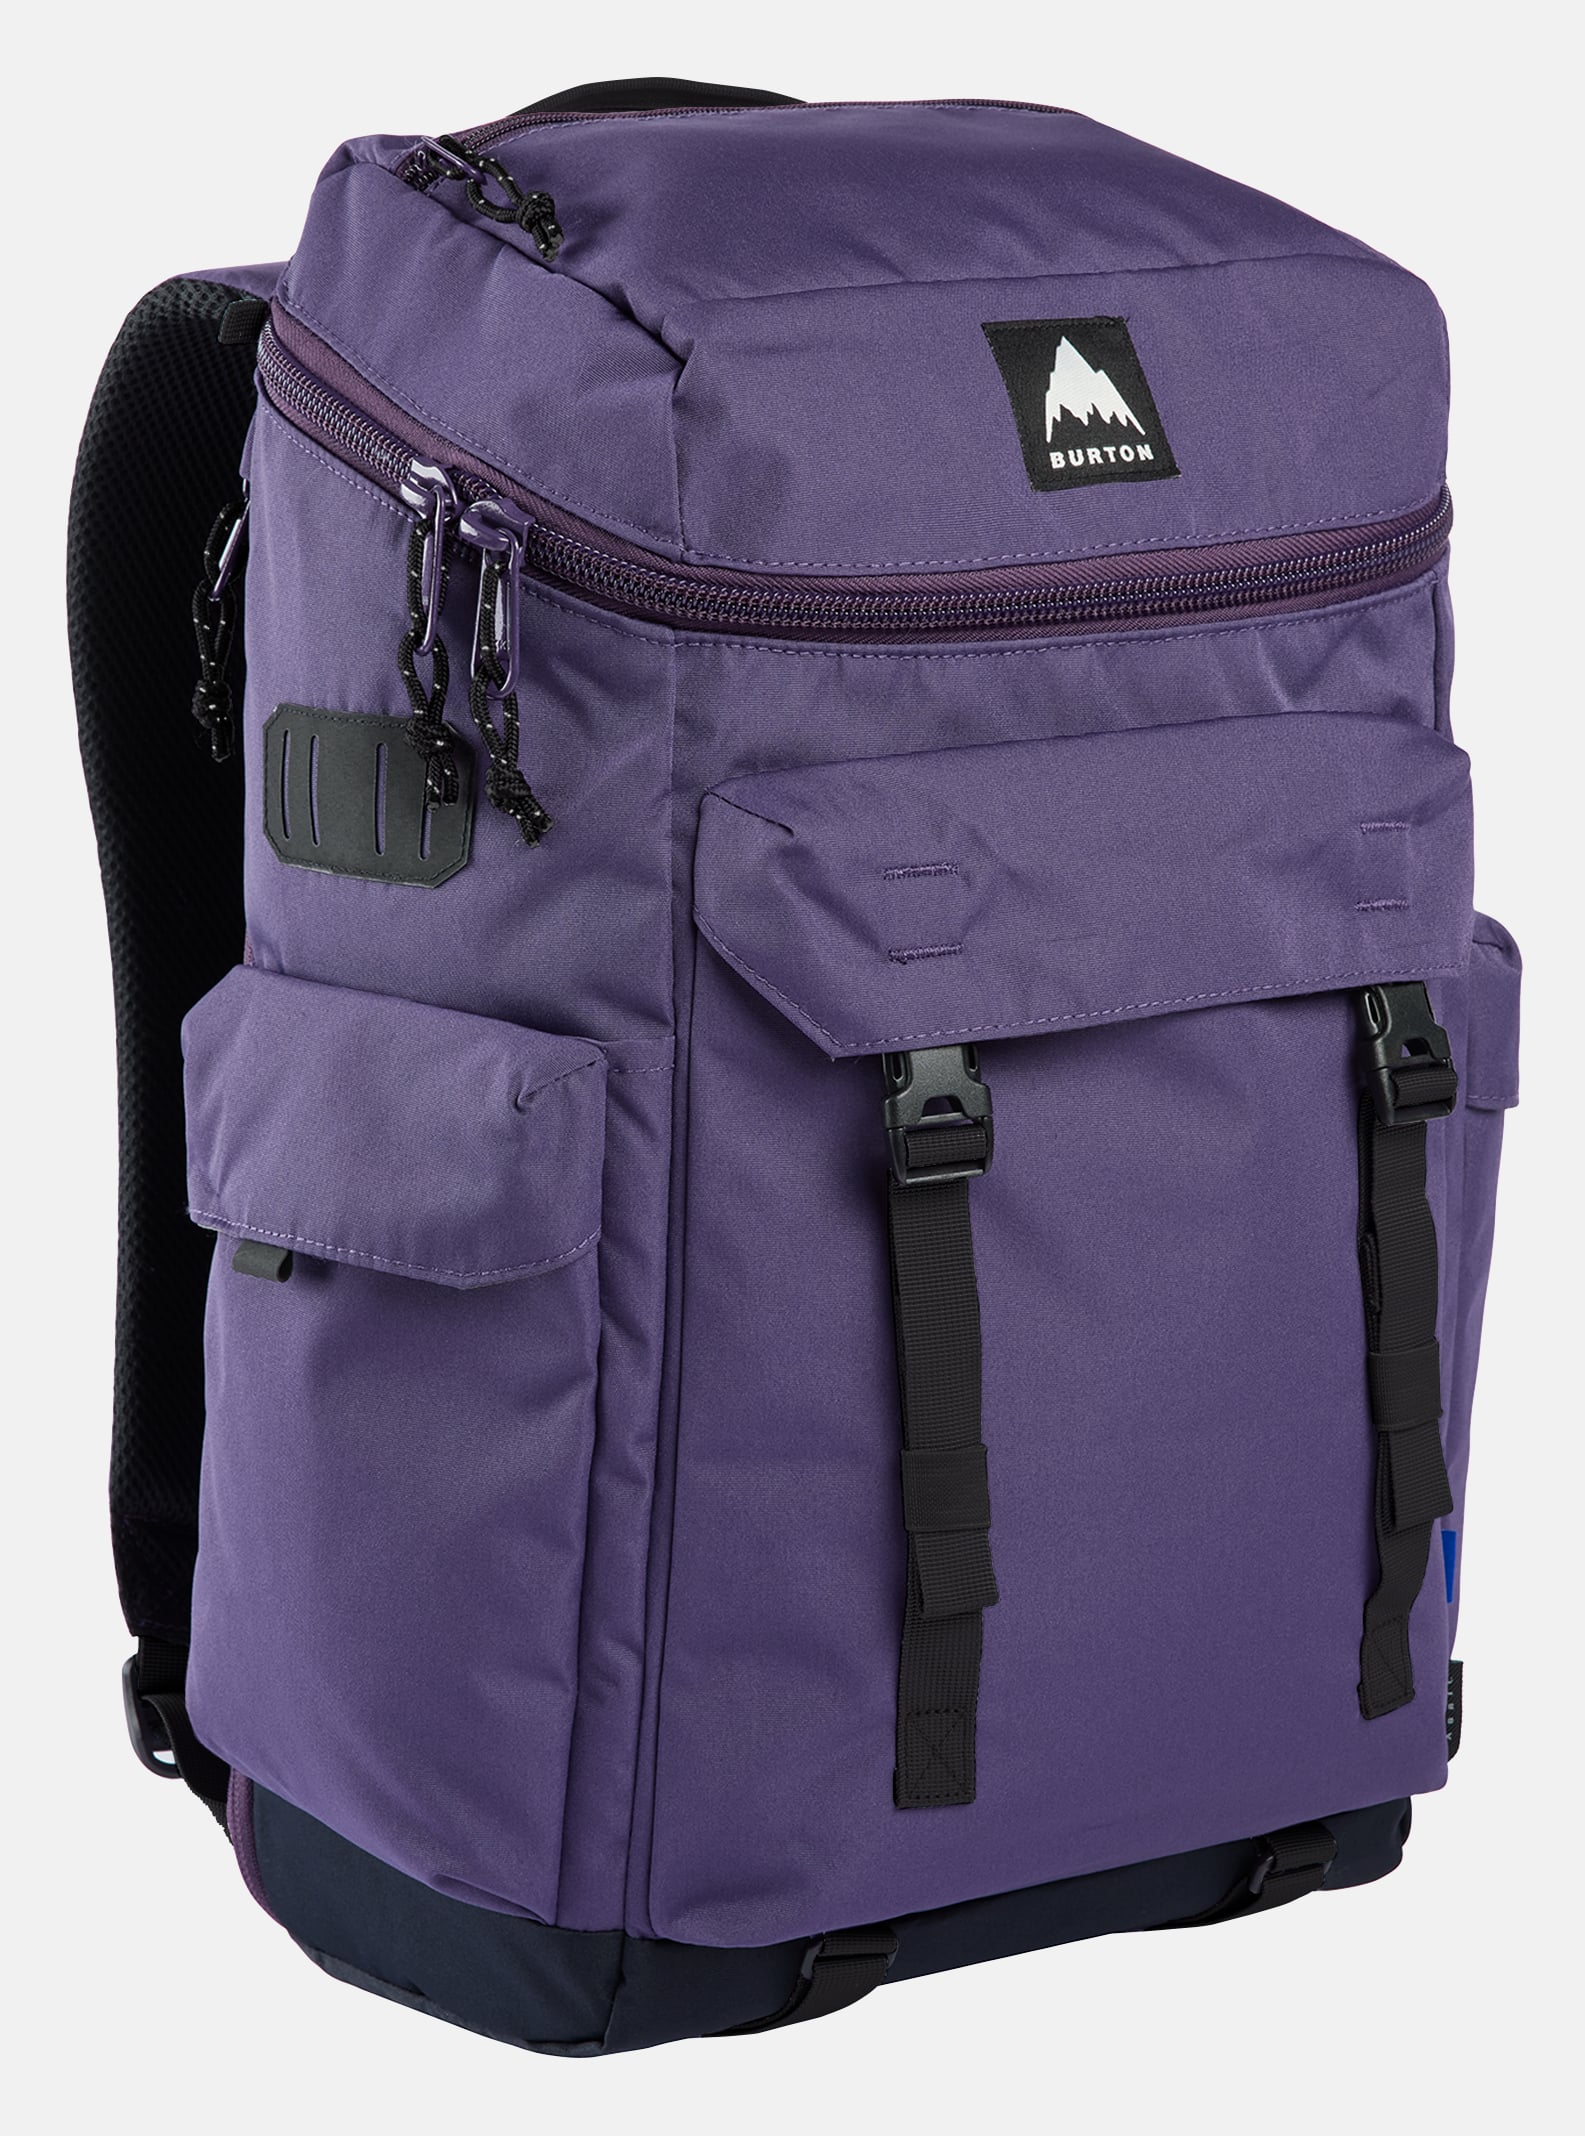 Rucksacks & Backpacks | Snowboard Backpacks | Burton Snowboards LV